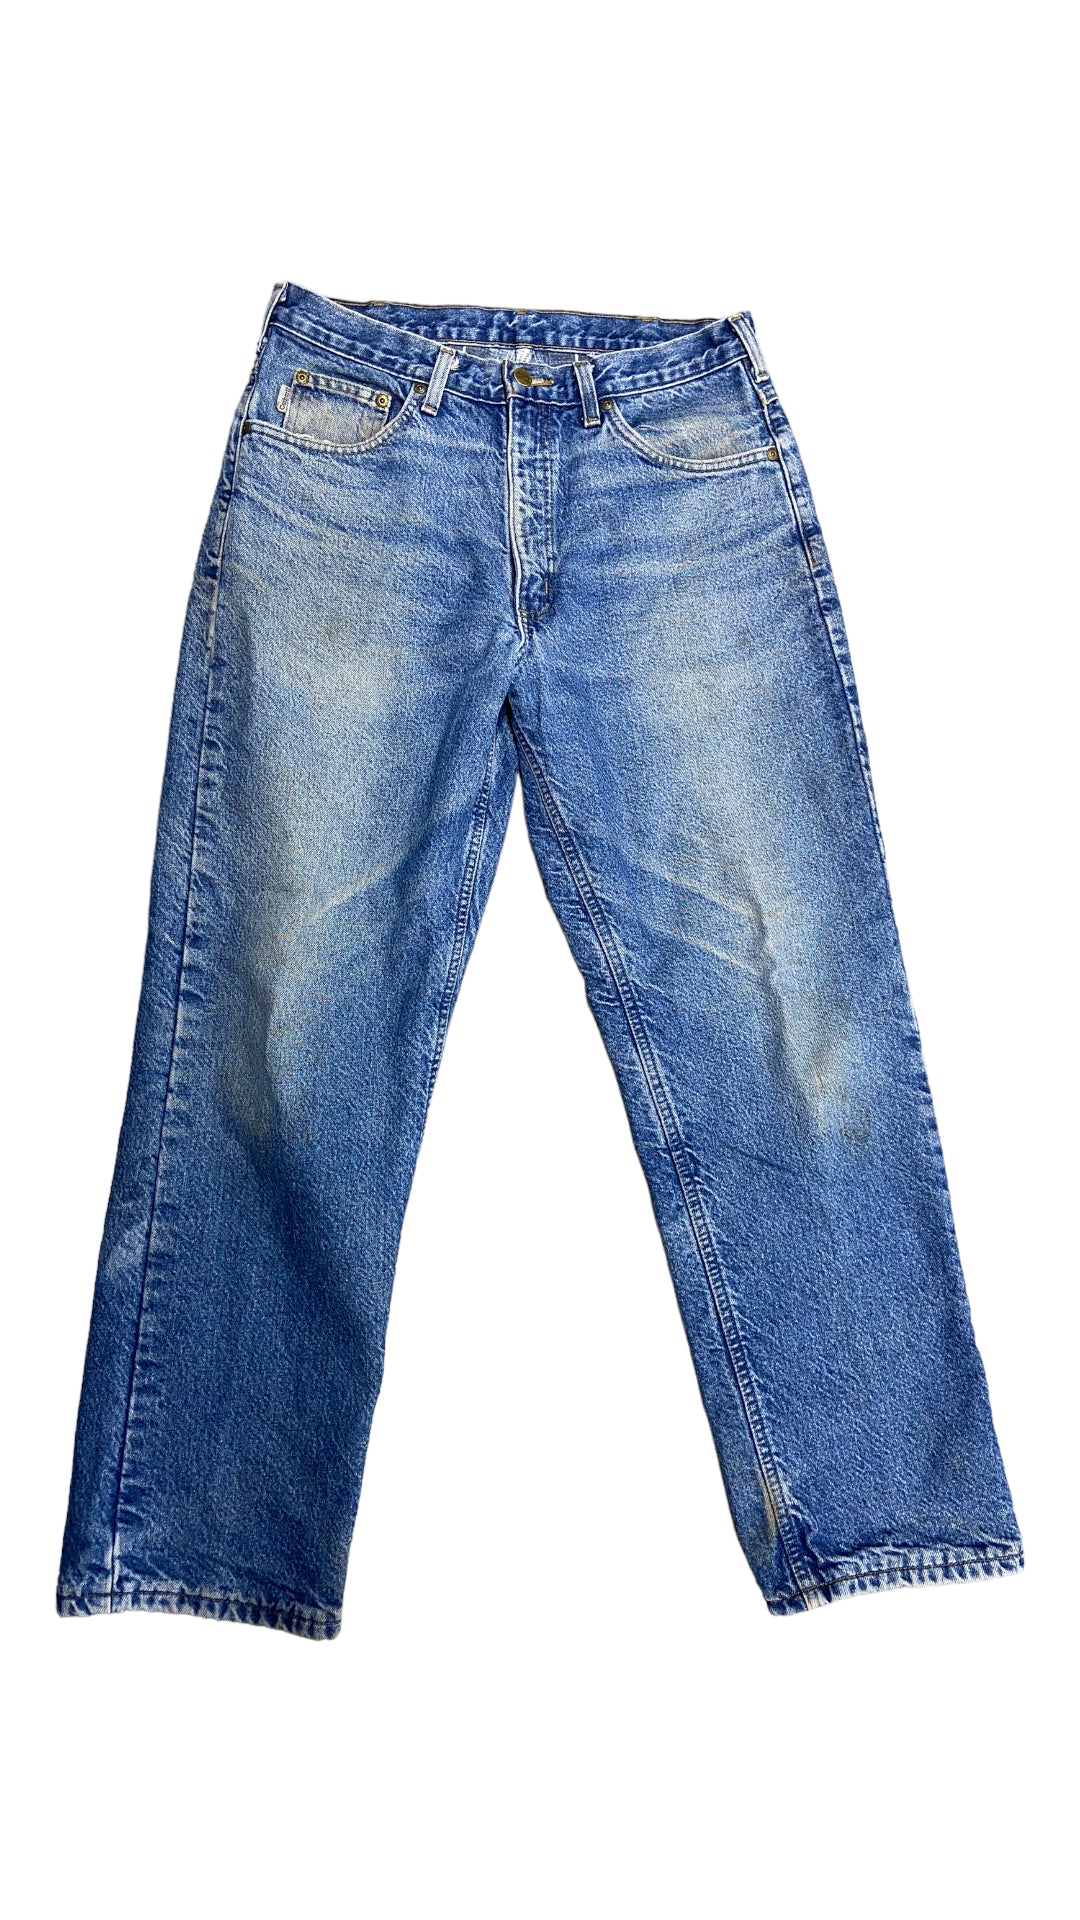 VTG Carhartt Flannel Lined Blue Denim Jeans Sz 32x29